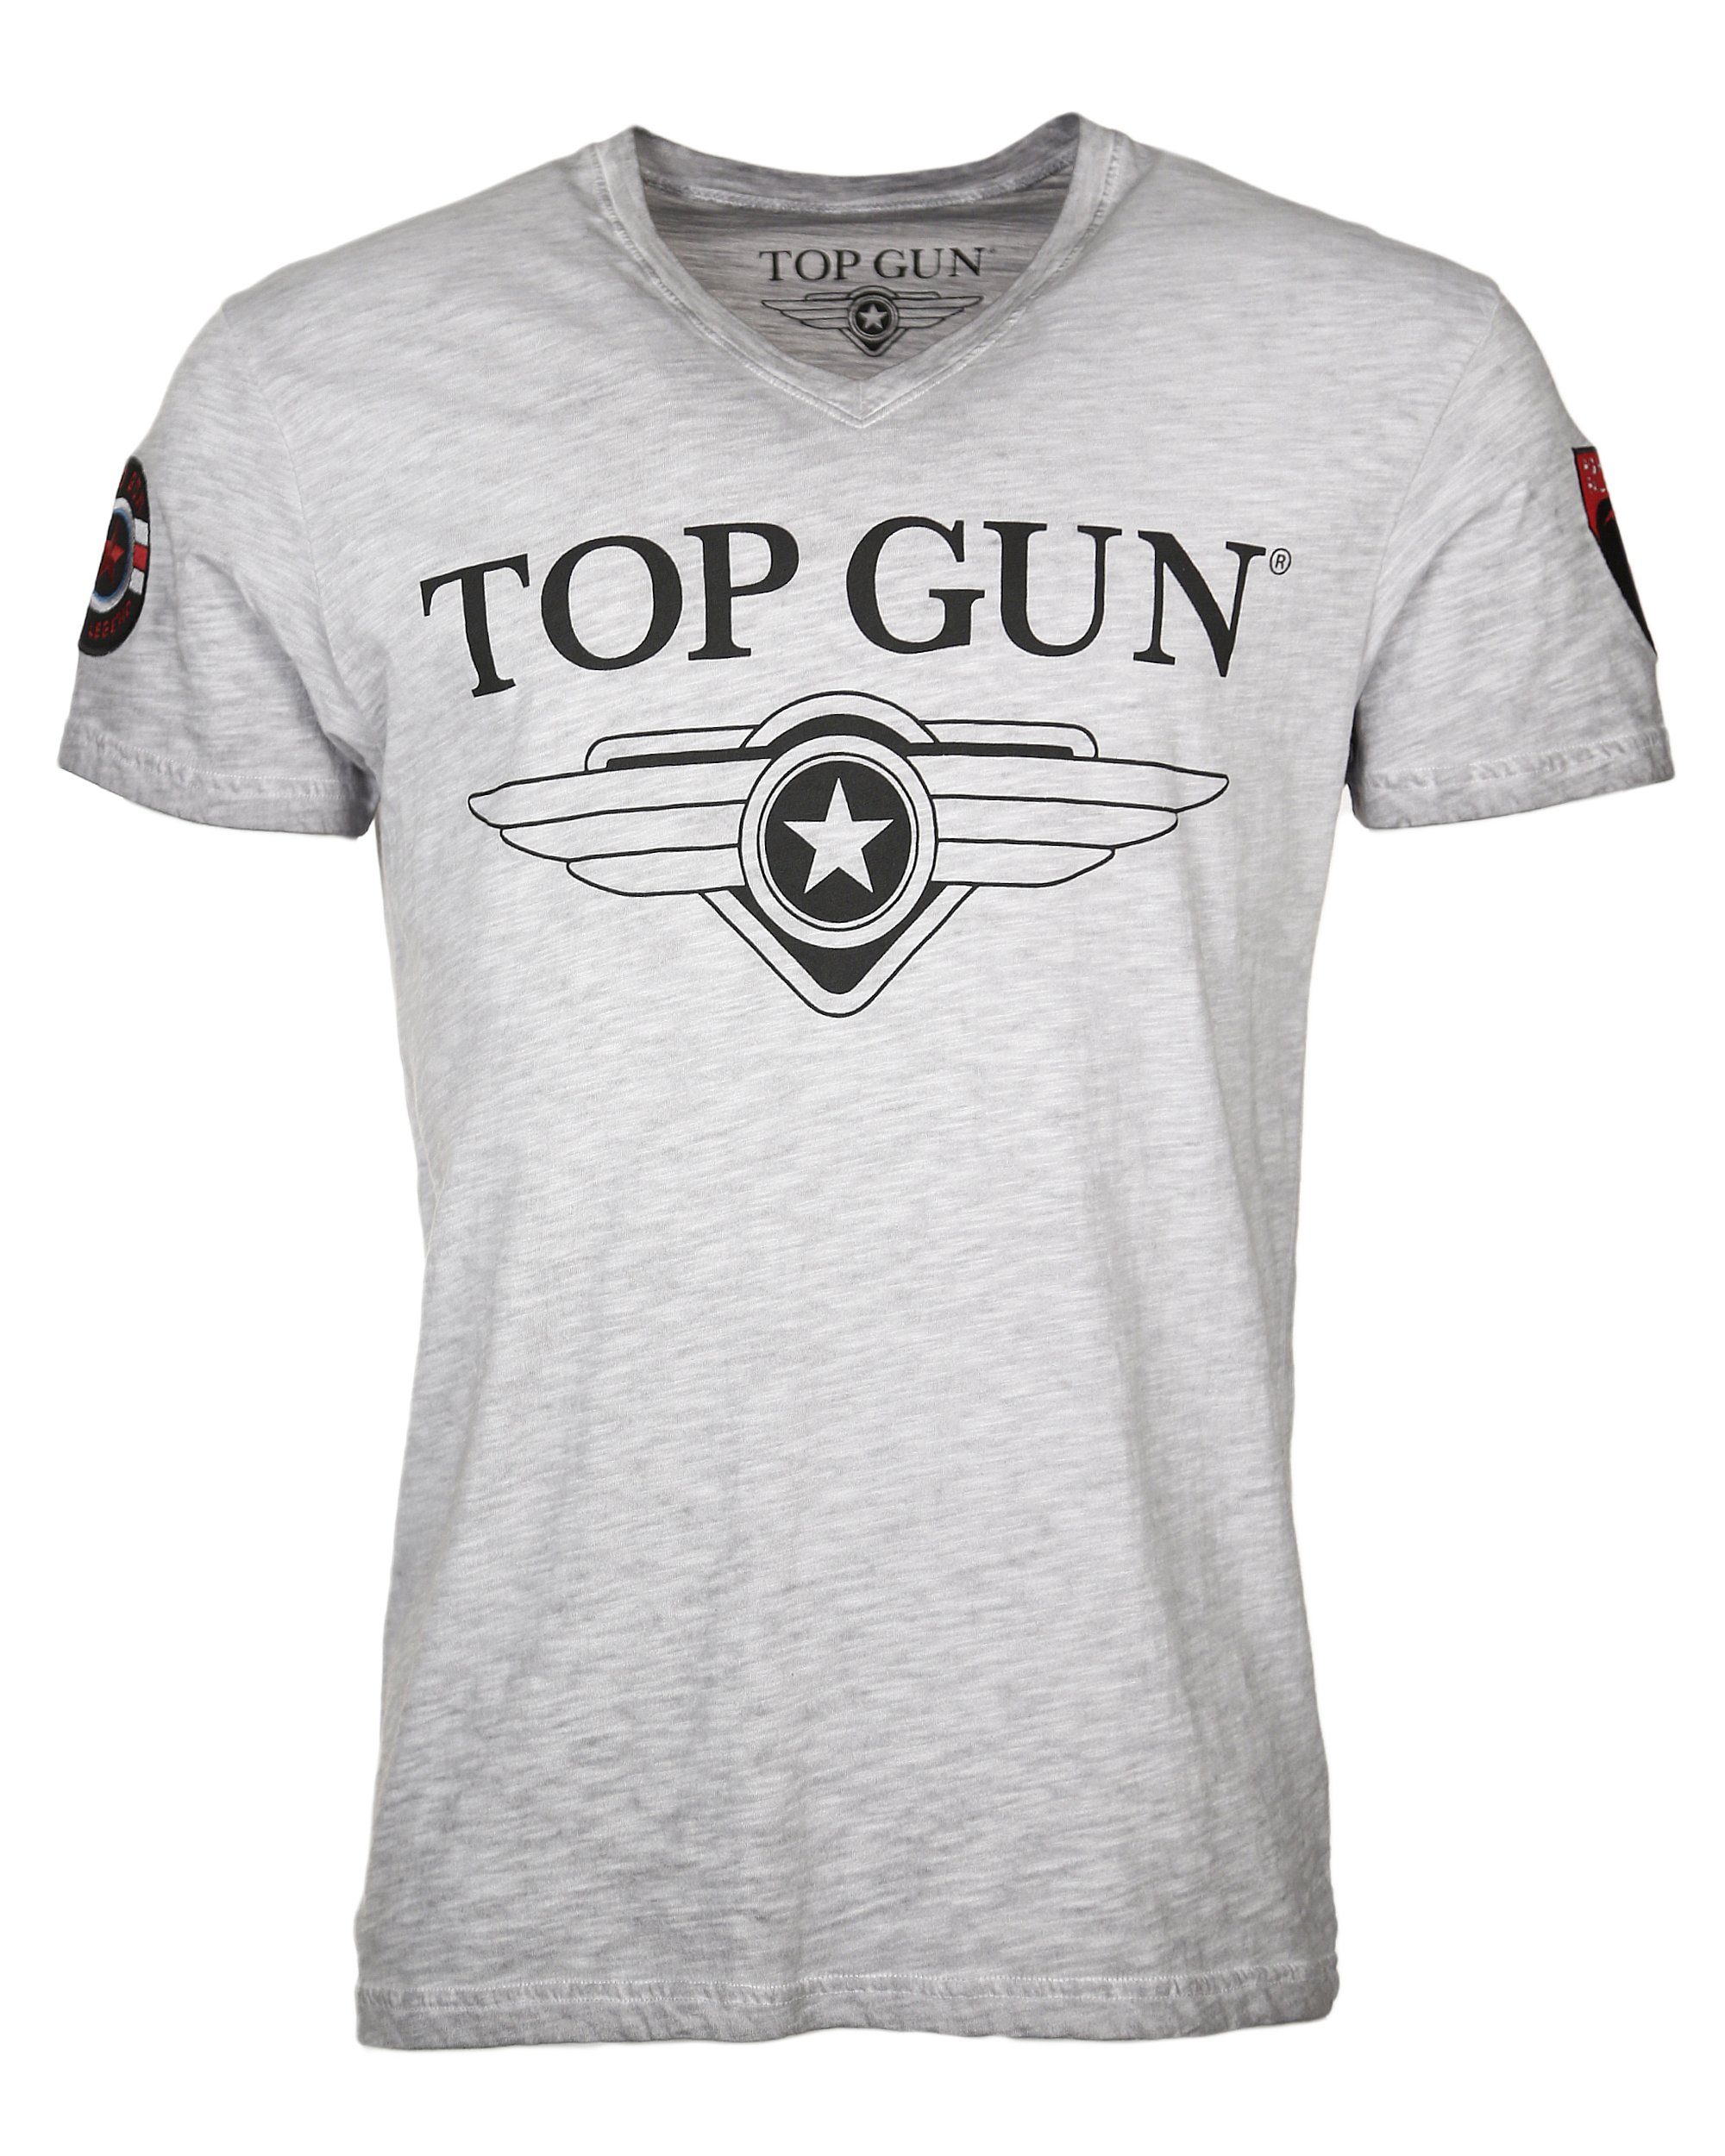 T-Shirt Stormy GUN TOP grey mélange TG20191005